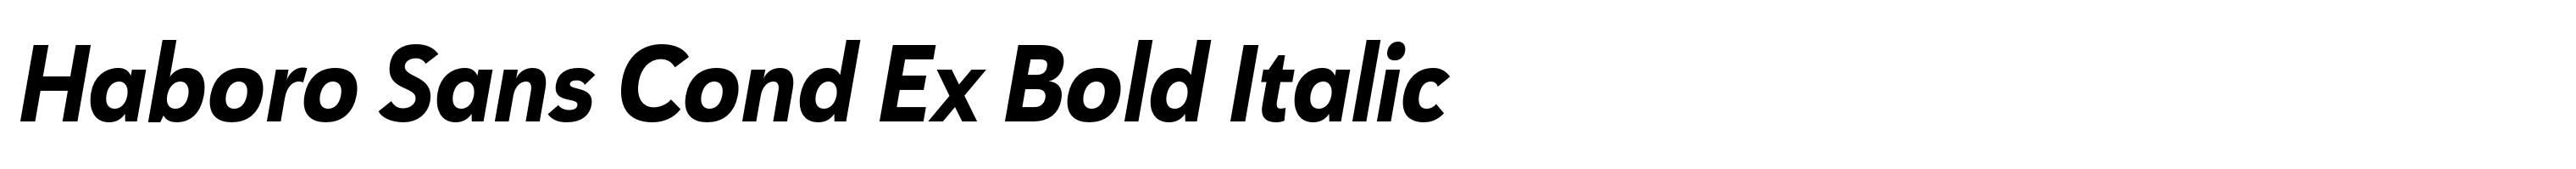 Haboro Sans Cond Ex Bold Italic